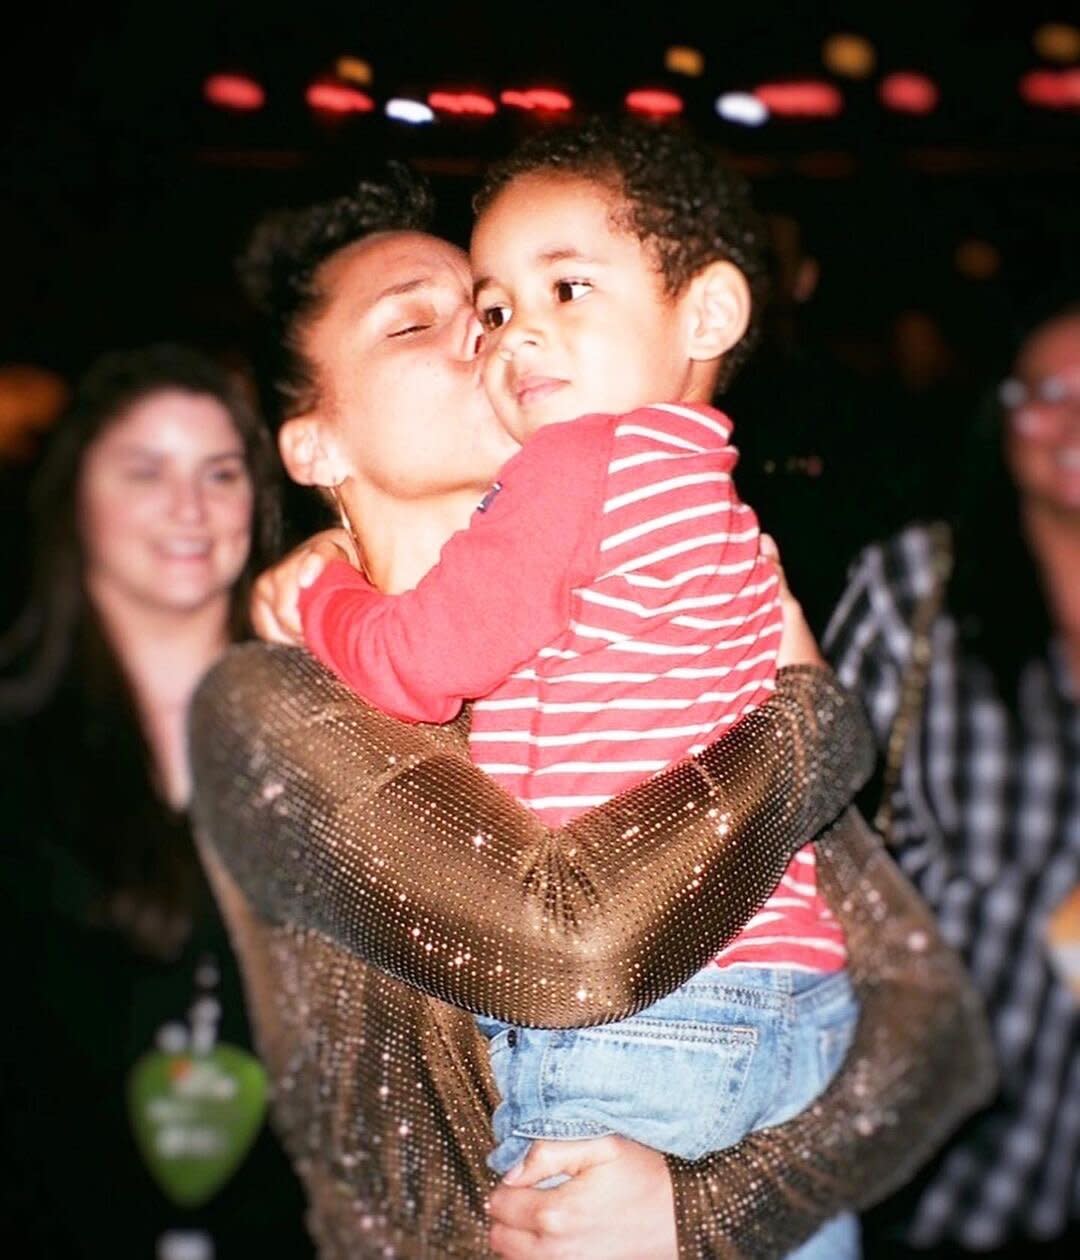 Alicia Keys and son Genesis